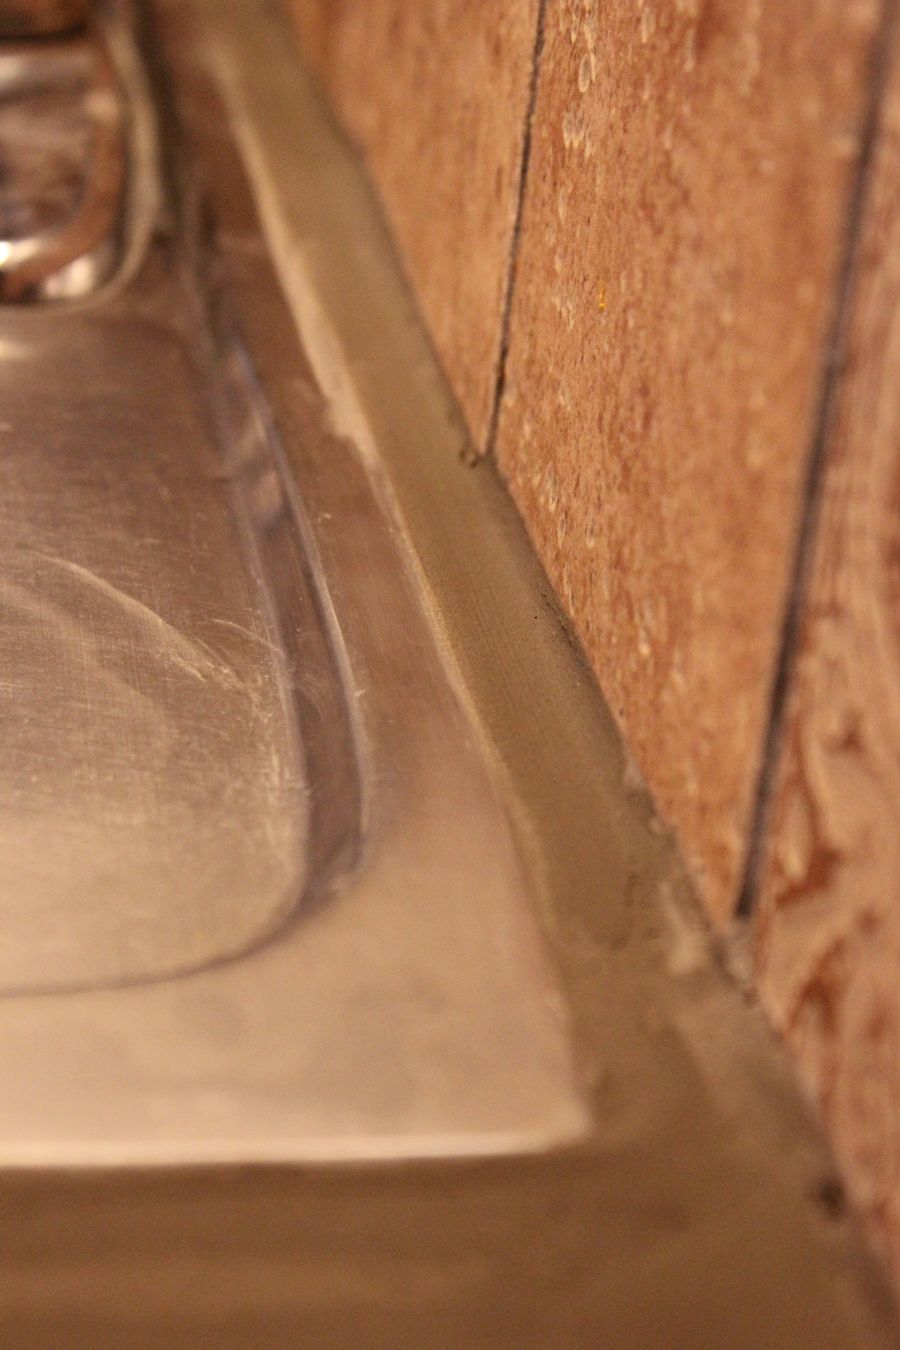 DIY Concrete Kitchen Countertops use your fingers